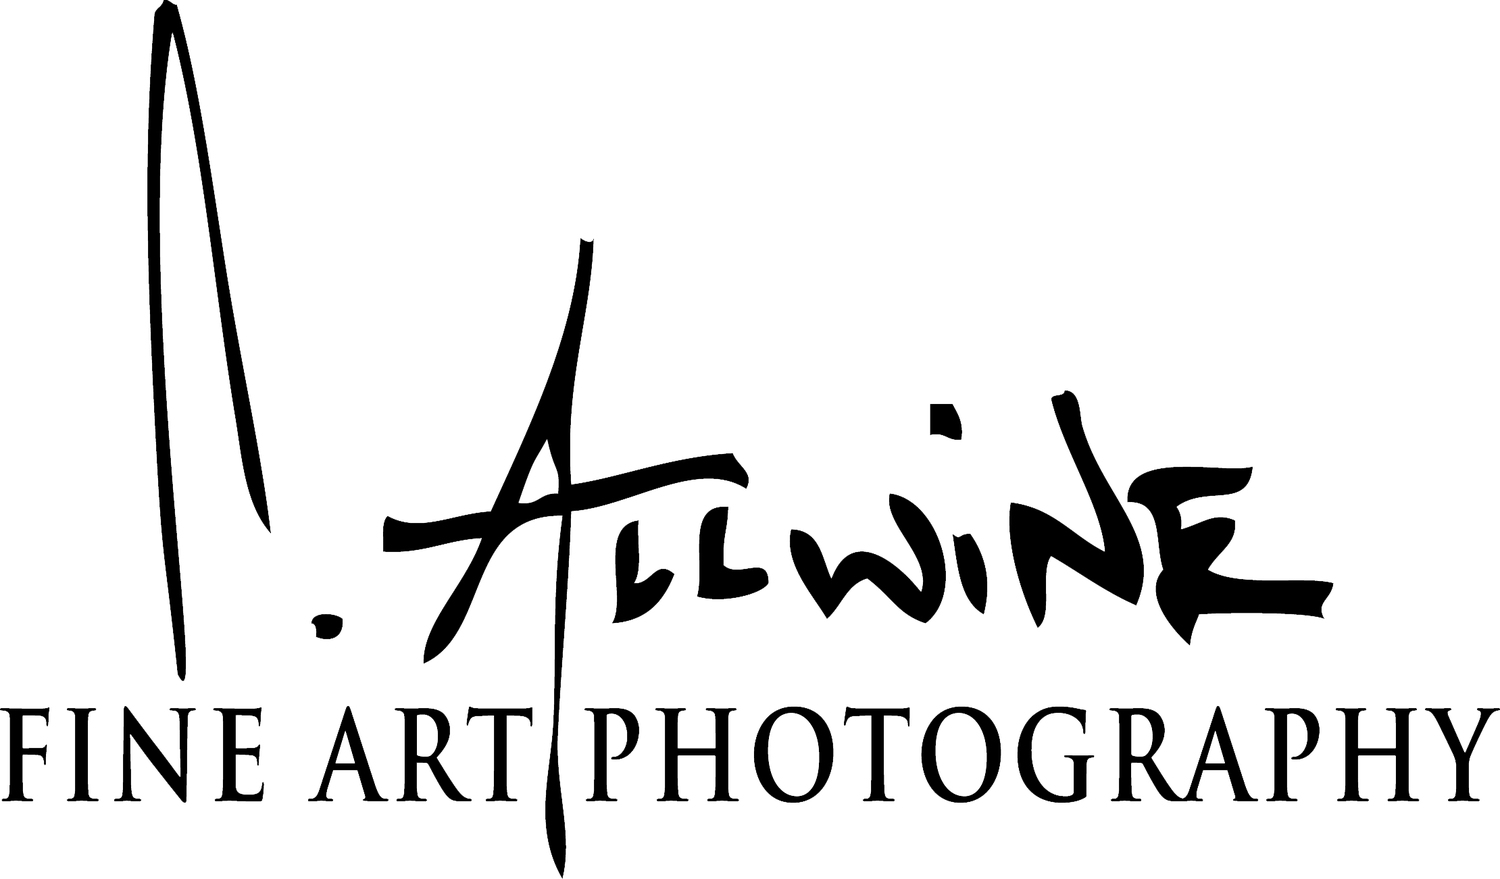 C. Allwine Fine Art Photography